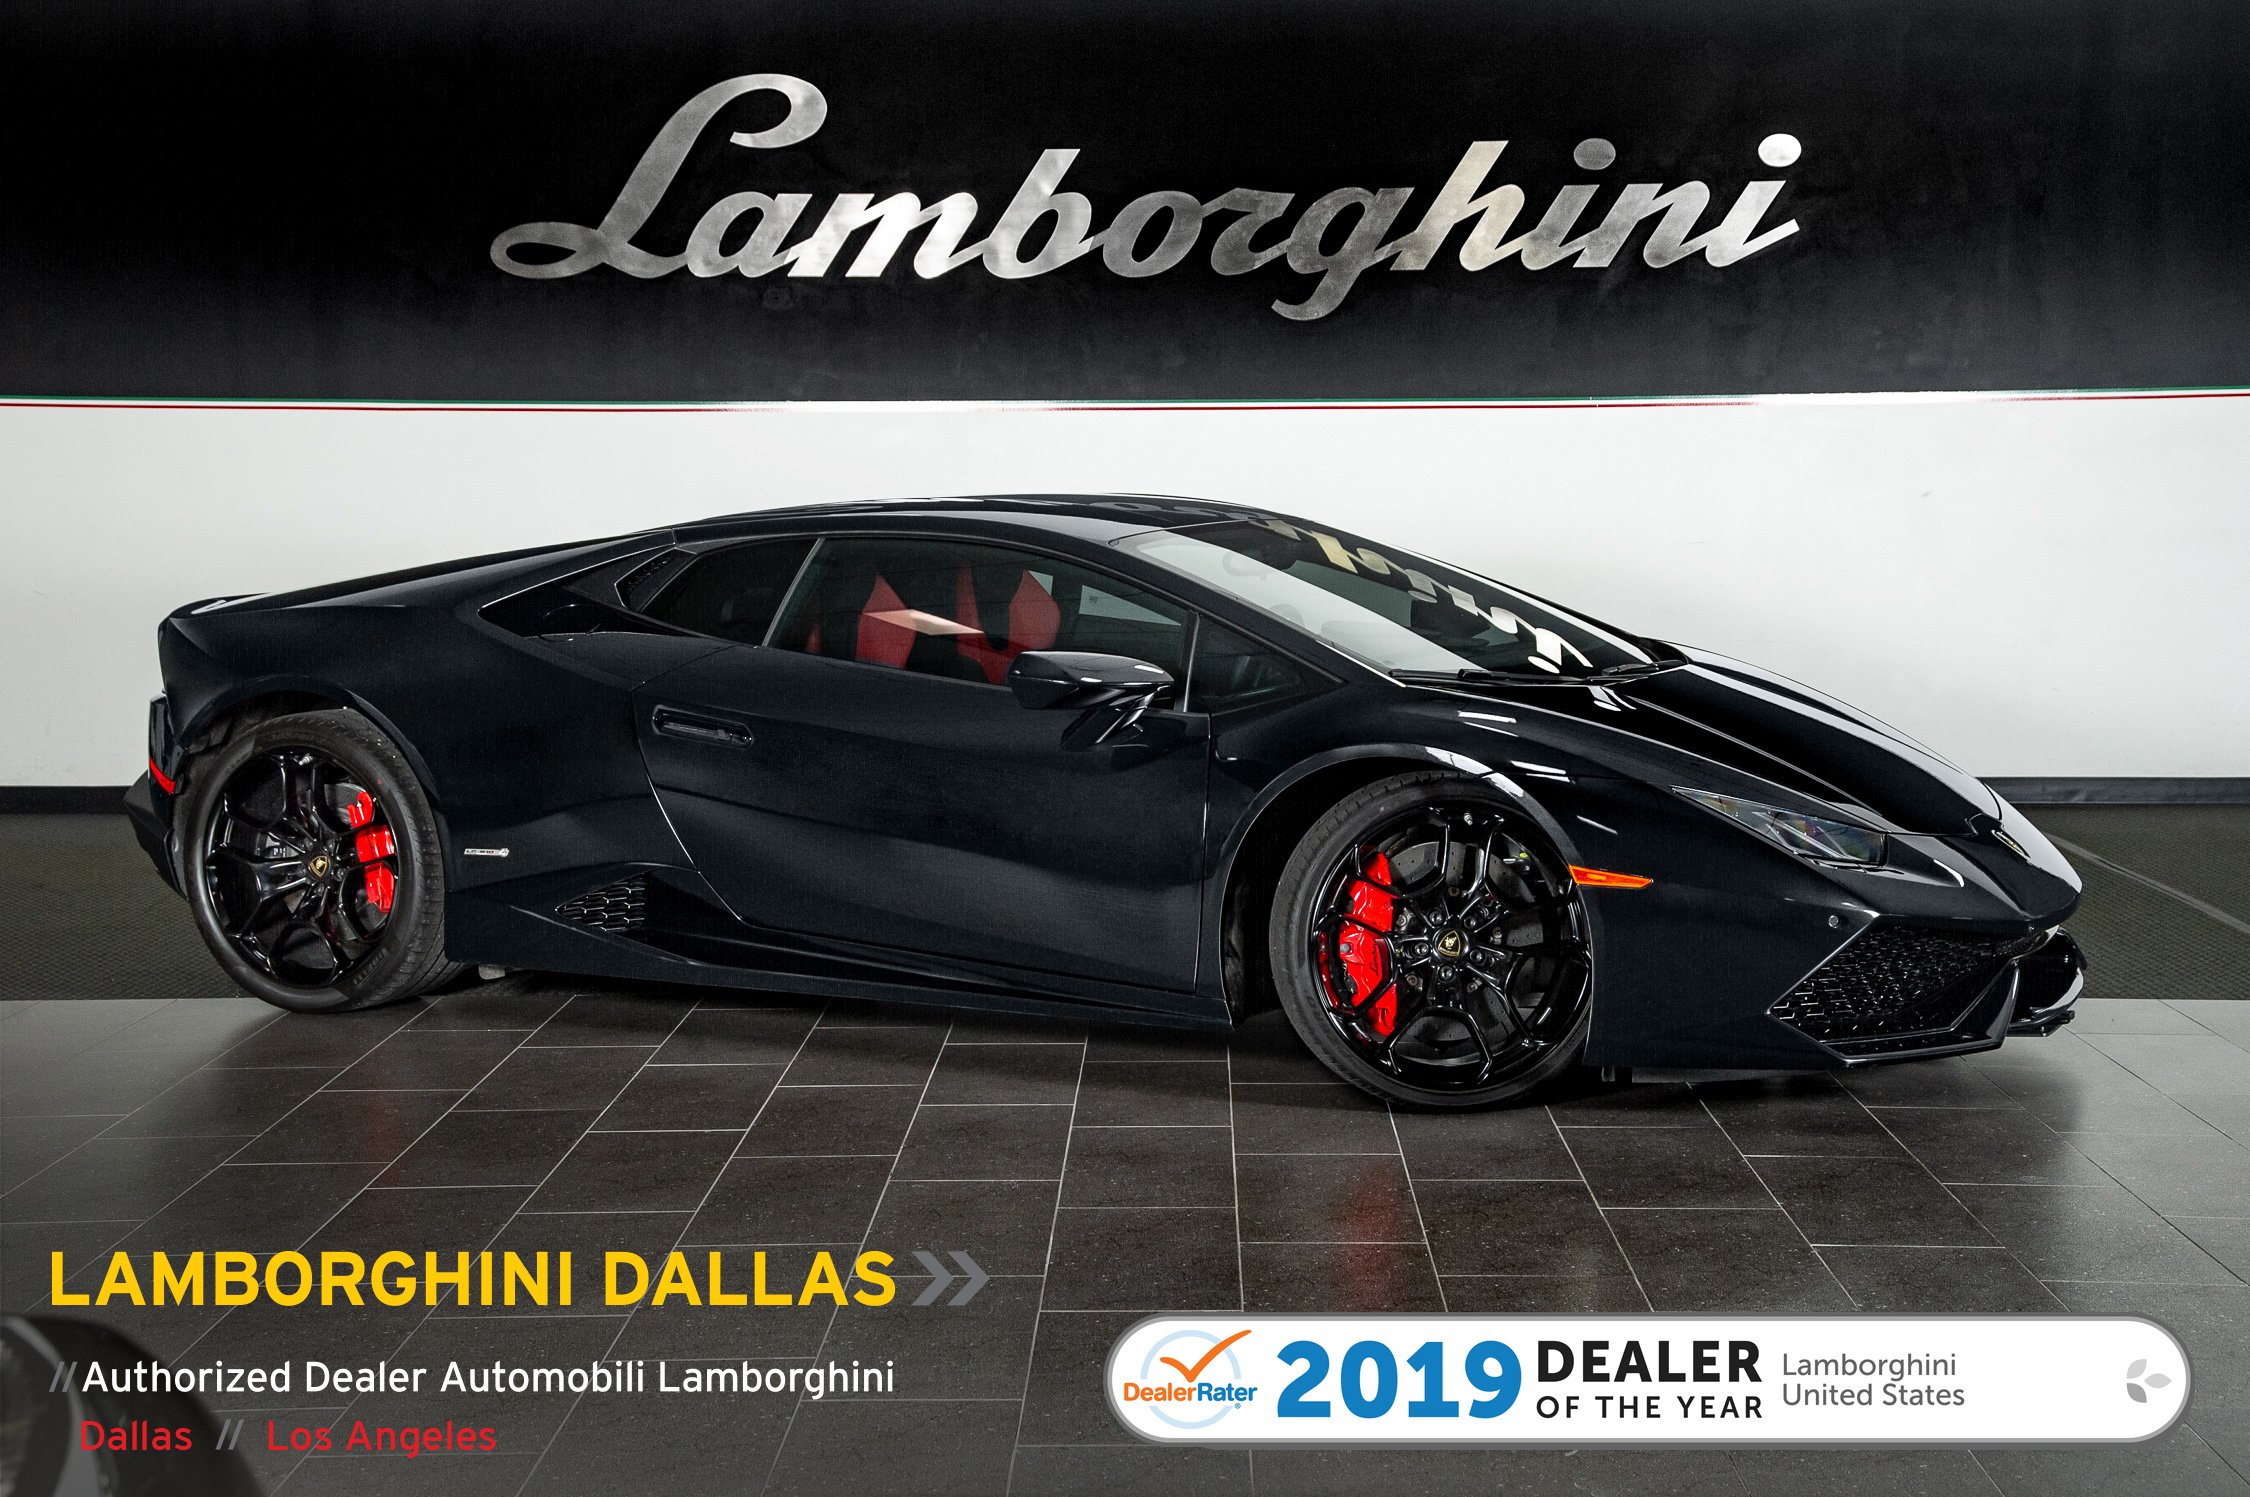 Used 2015 Lamborghini Huracan Lp610 4 For Sale Richardson Tx Stock Lc654 Vin Zhwuc1zf3fla01991